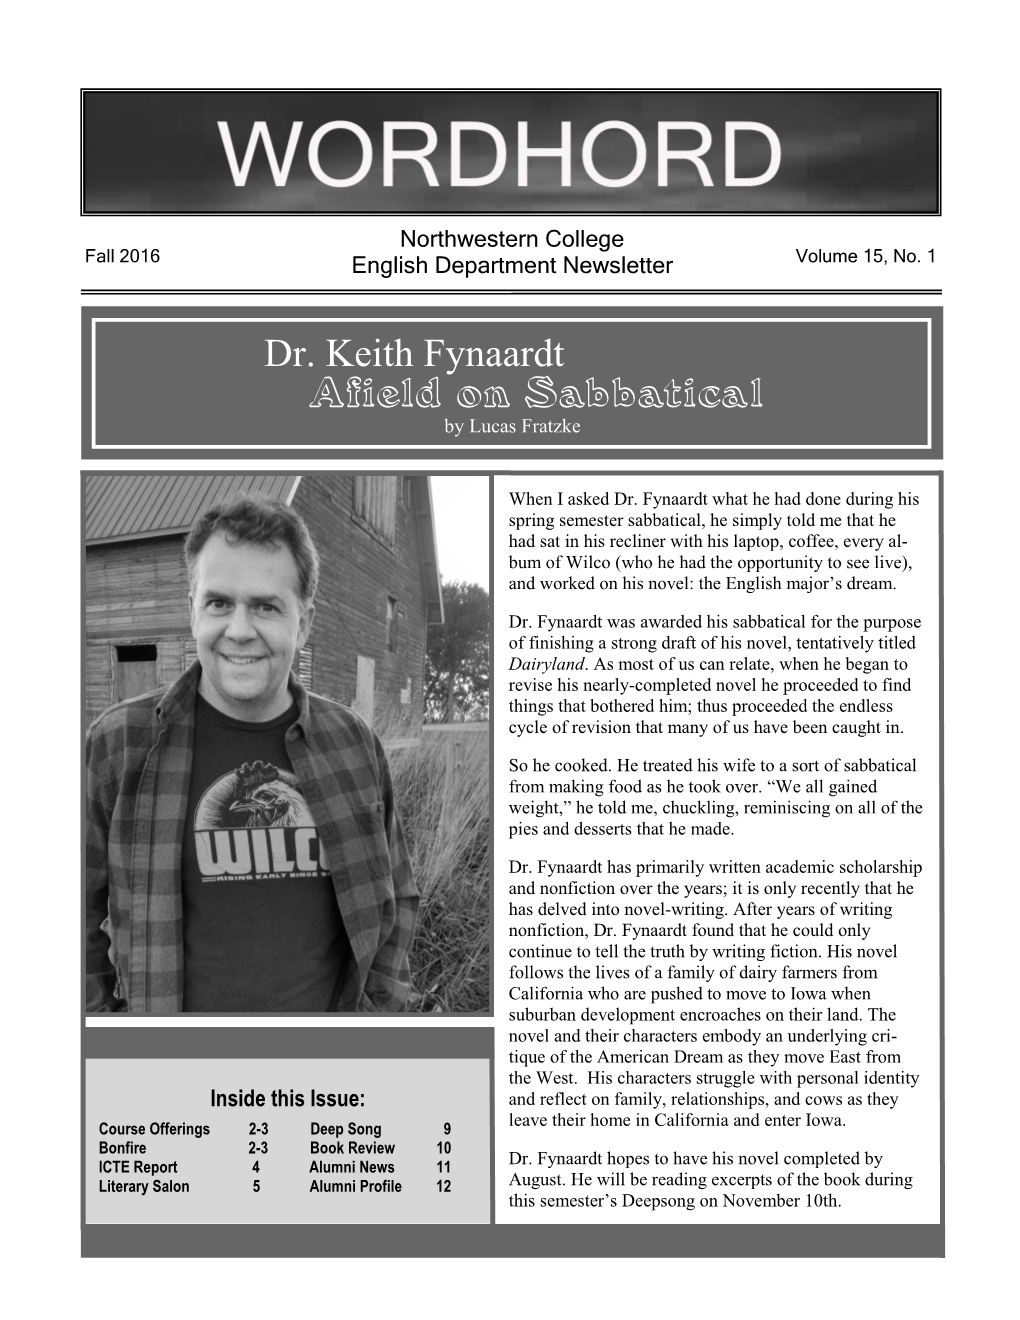 Dr. Keith Fynaardt Afield on Sabbatical by Lucas Fratzke